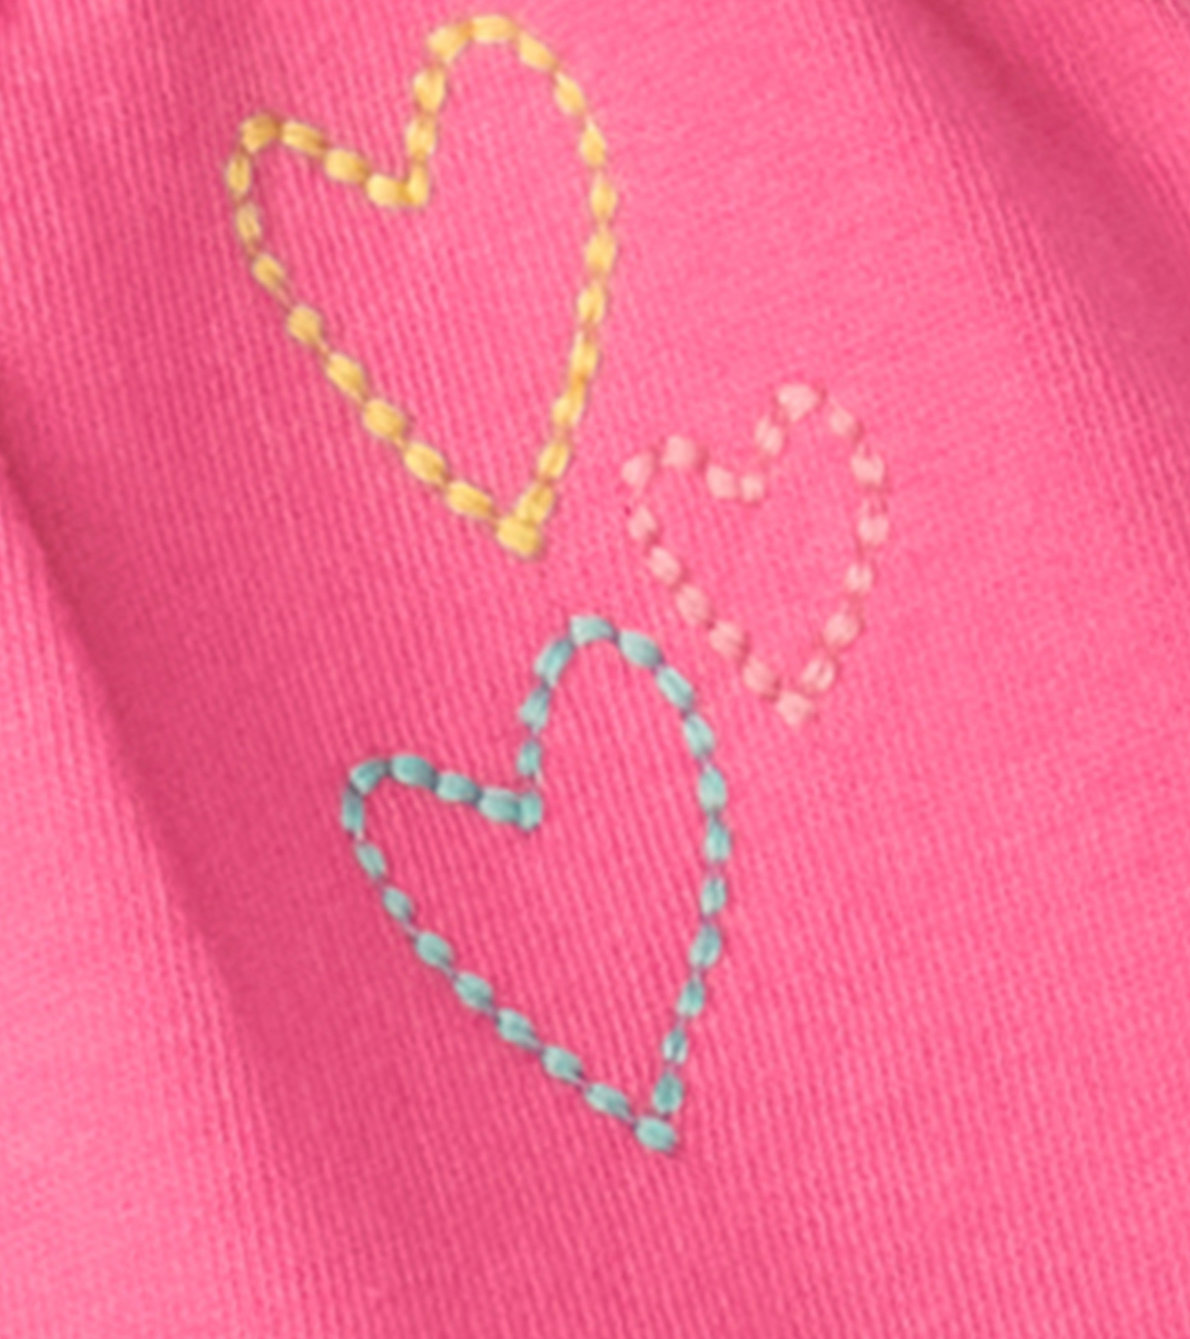 View larger image of Baby & Toddler Girls Pink Paper Bag Shorts